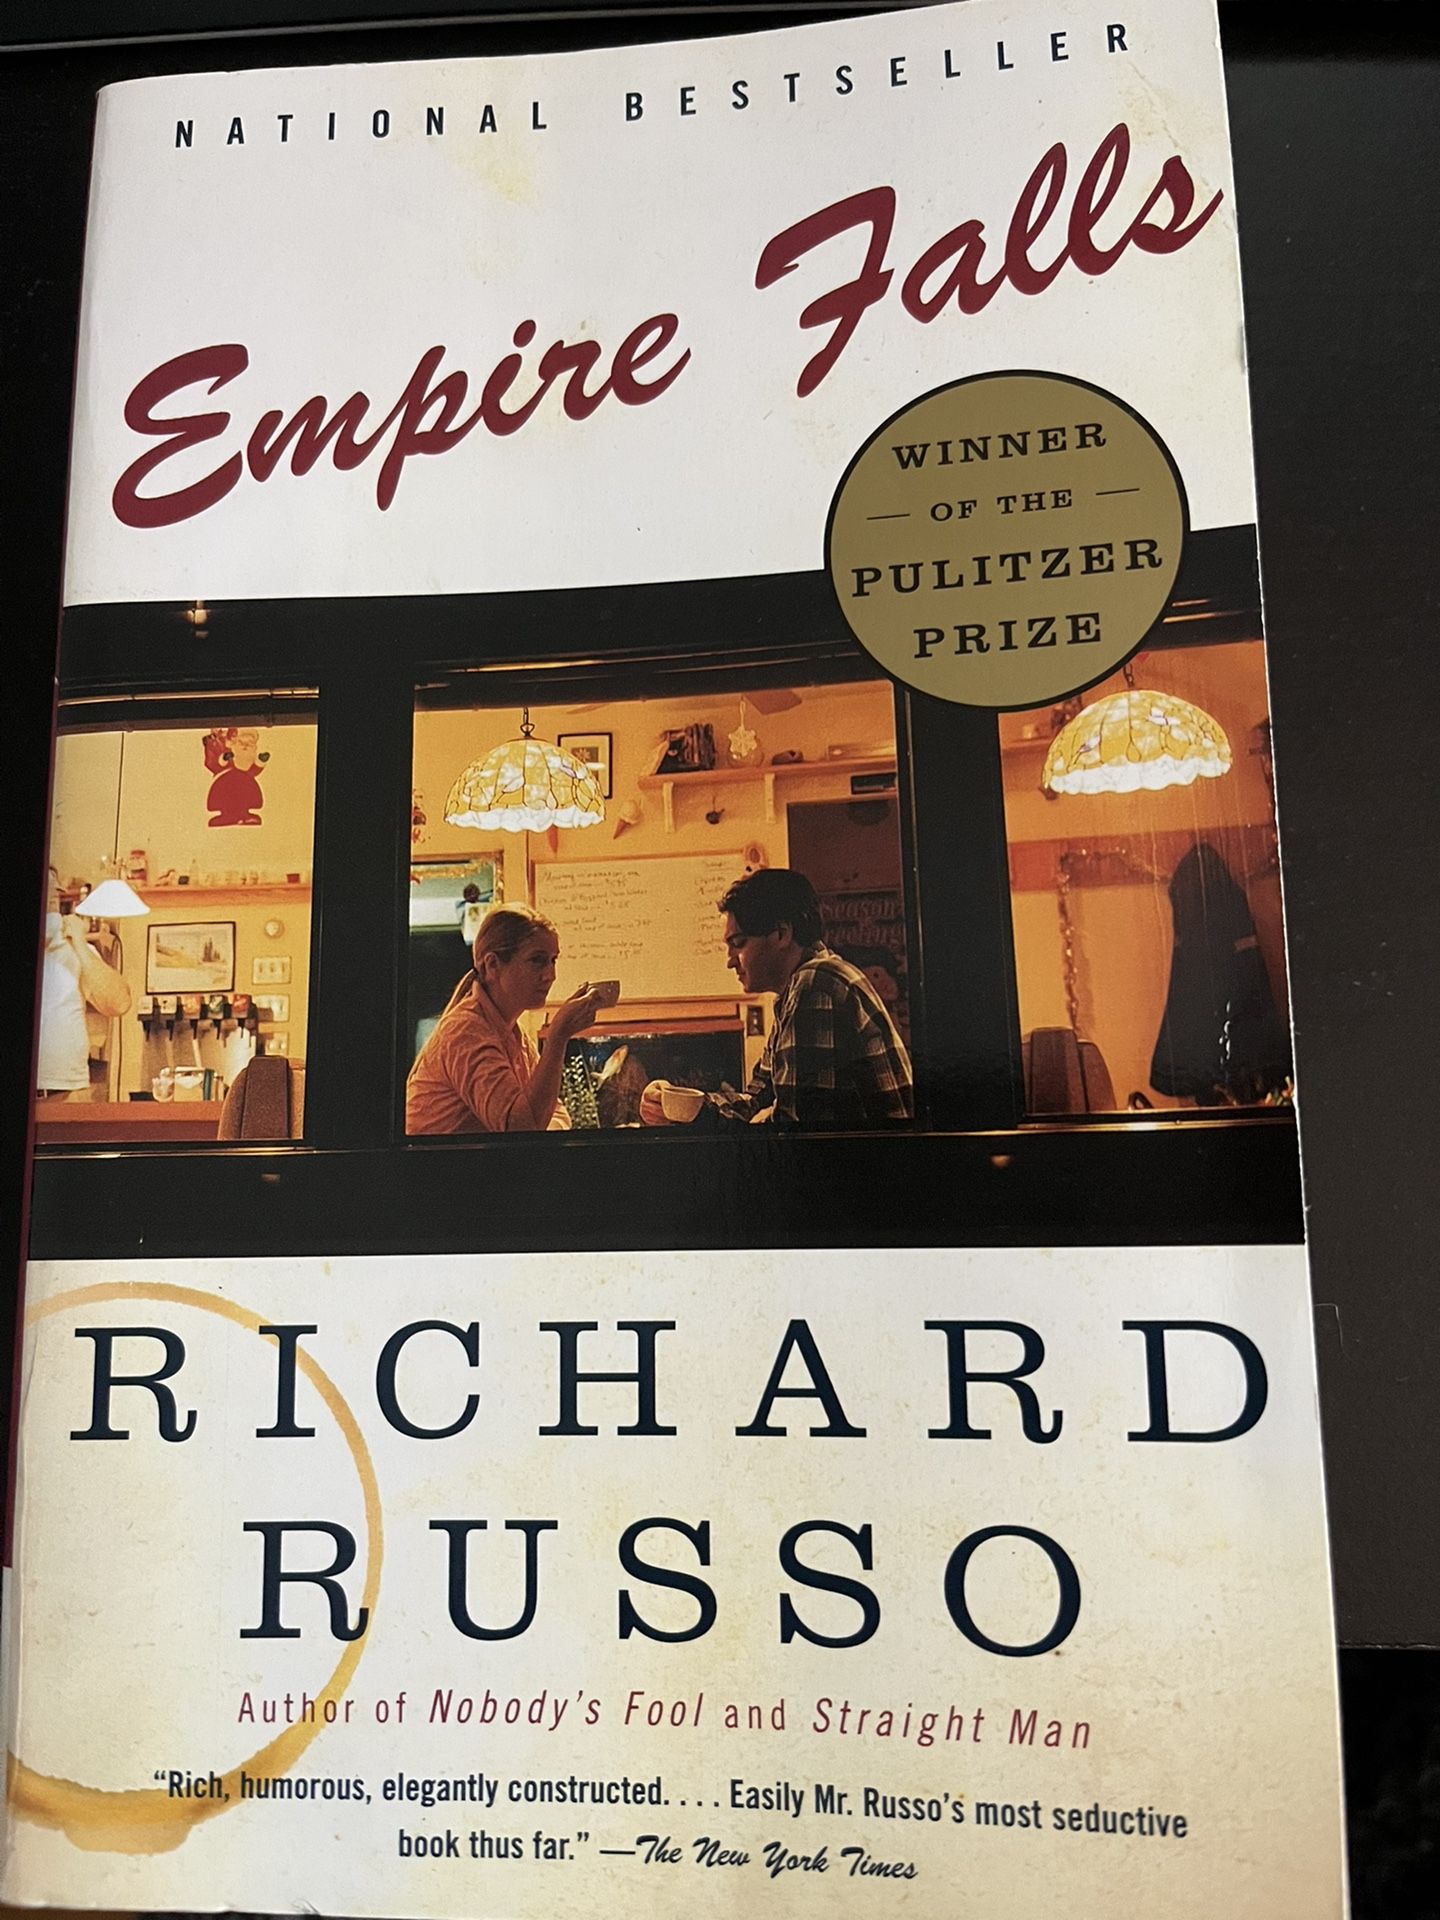 Empire Falls  Richard Russo  National Best Seller